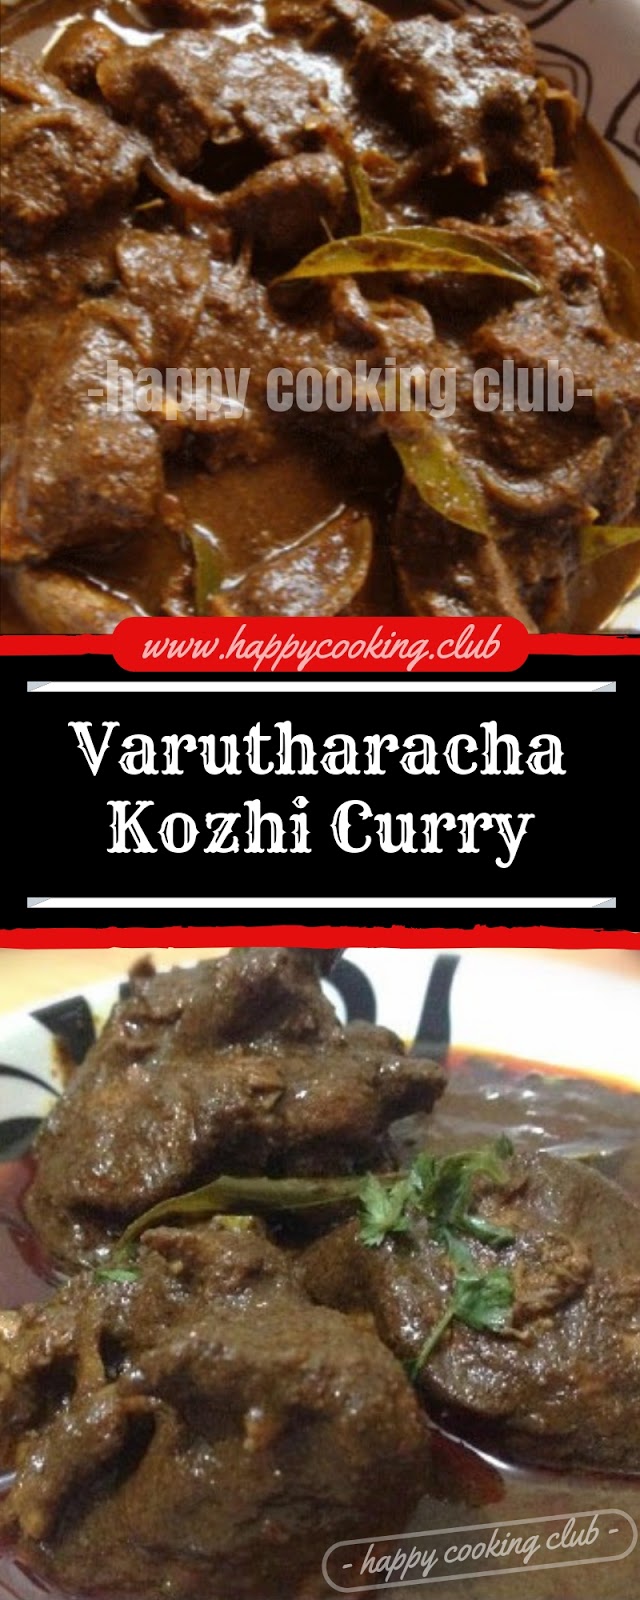 Varutharacha Kozhi Curry